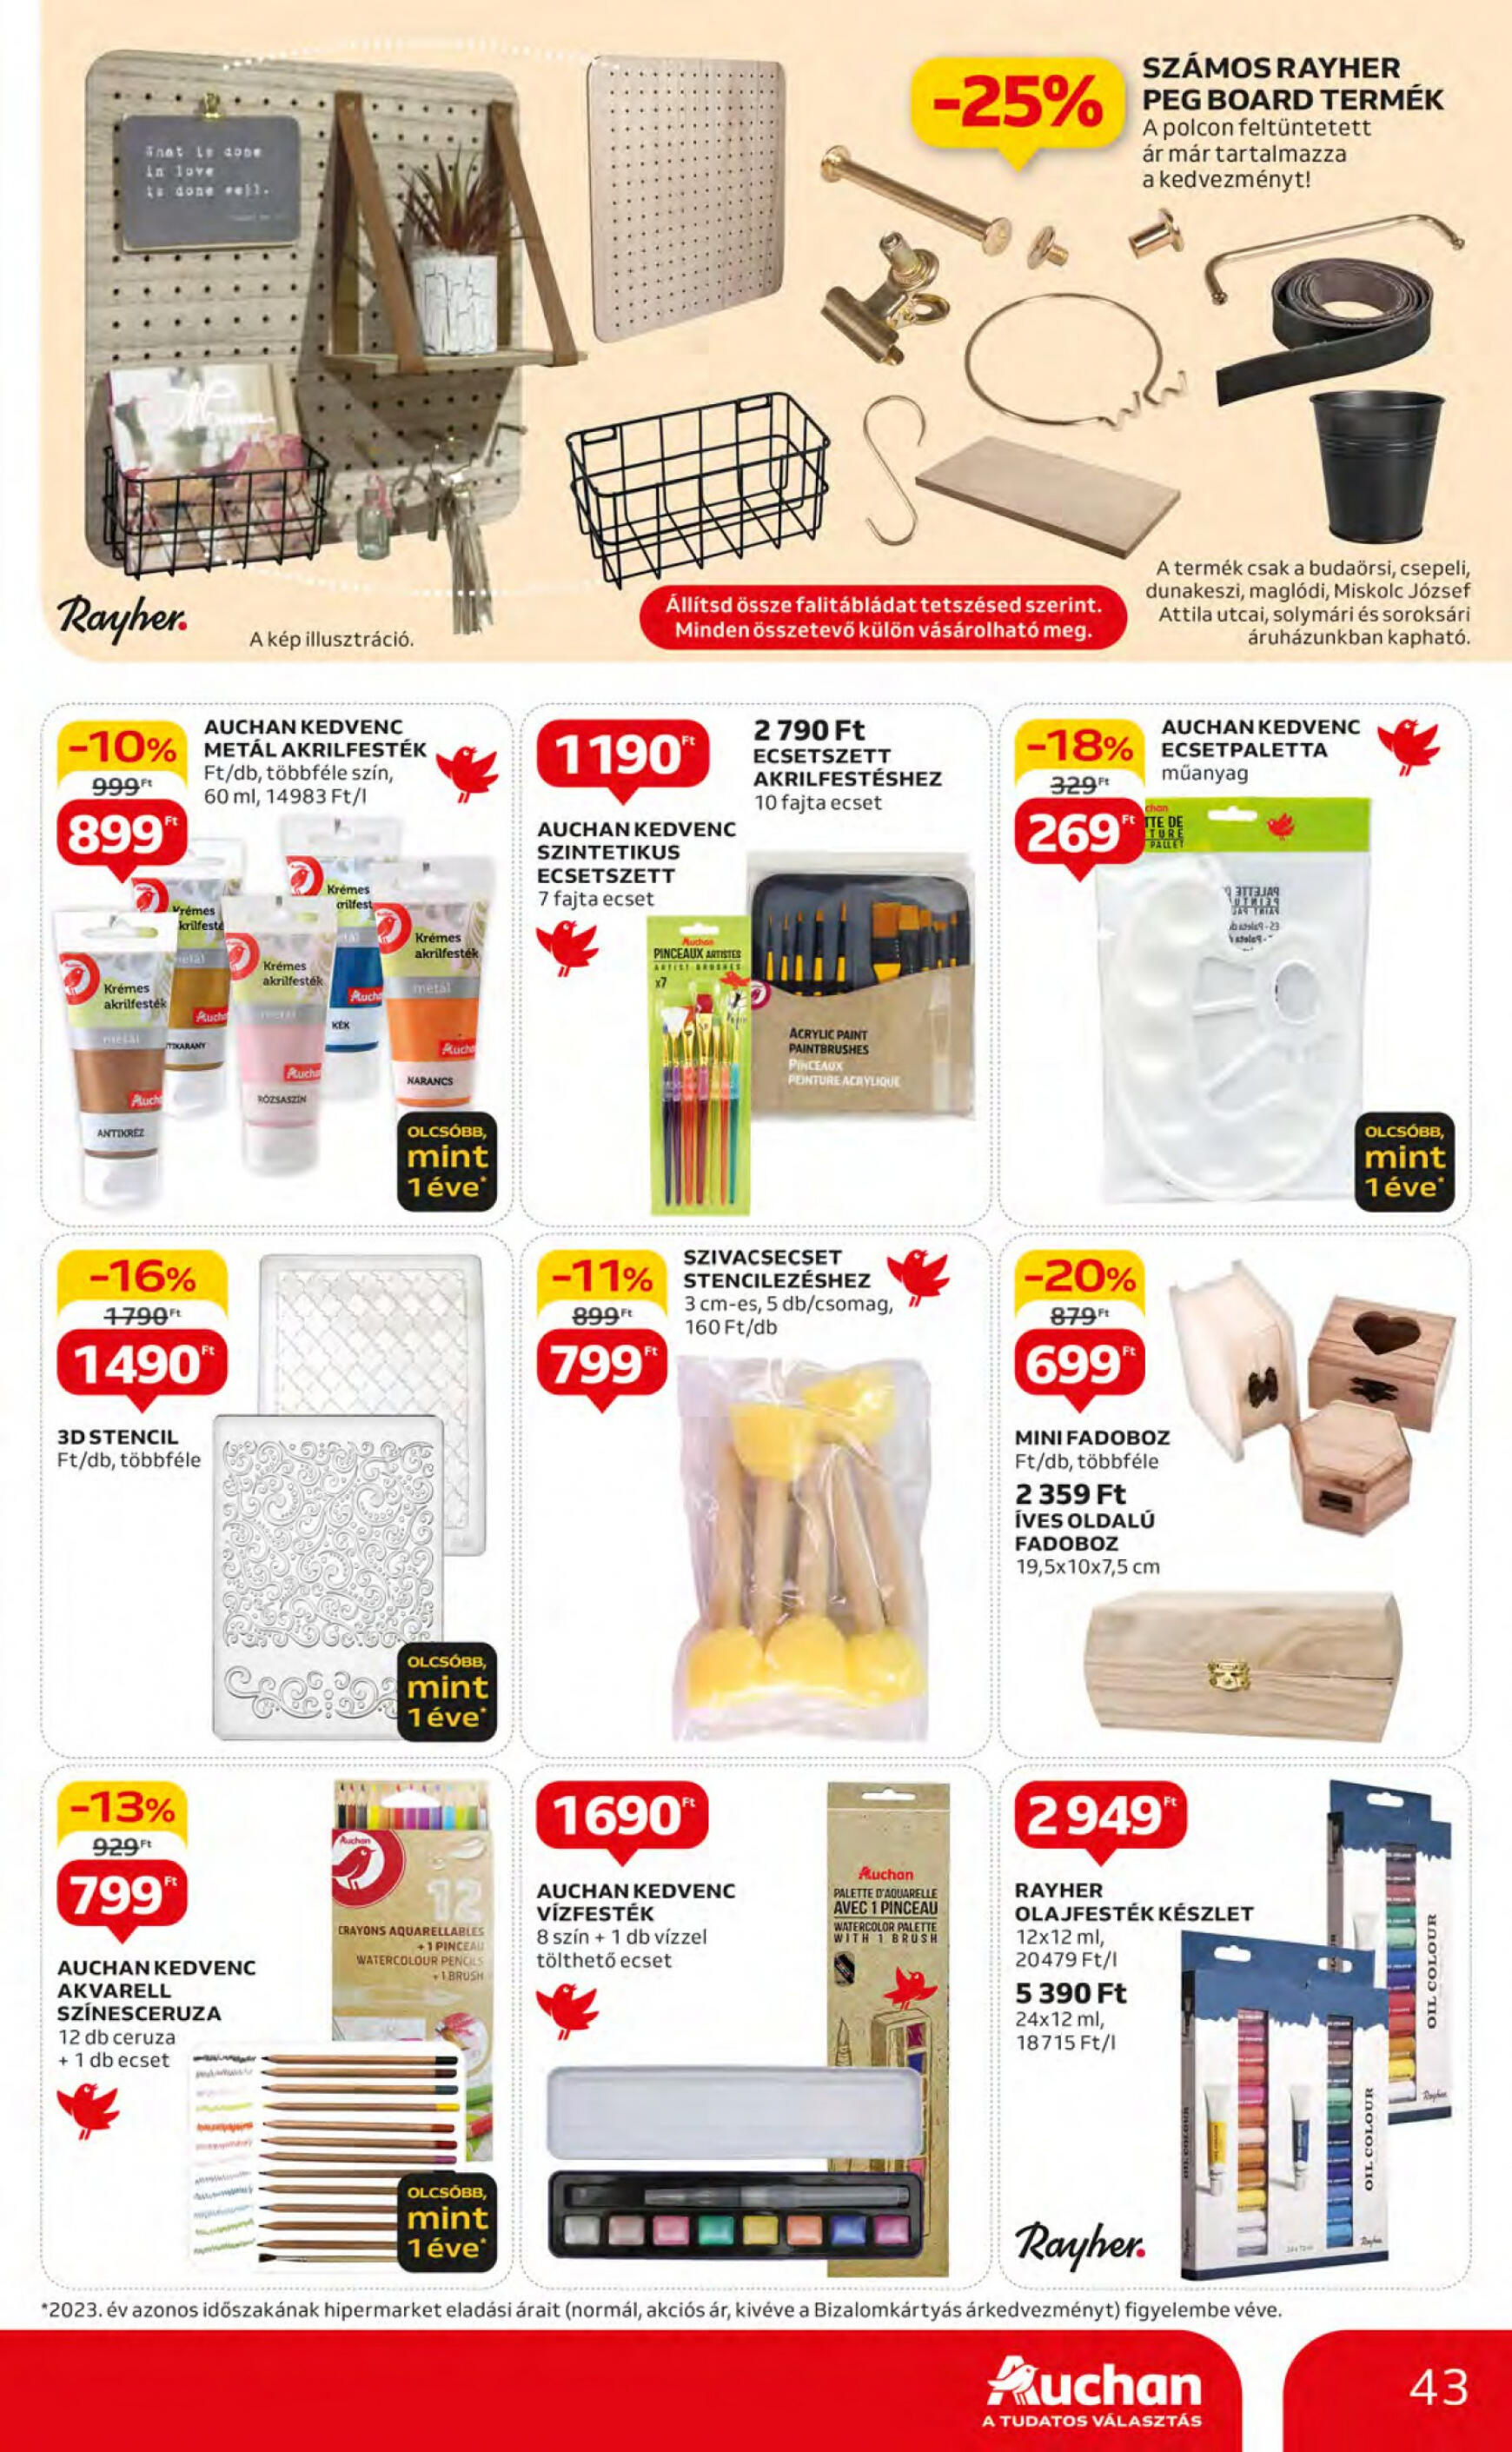 auchan - Aktuális újság Auchan 05.09. - 05.15. - page: 43